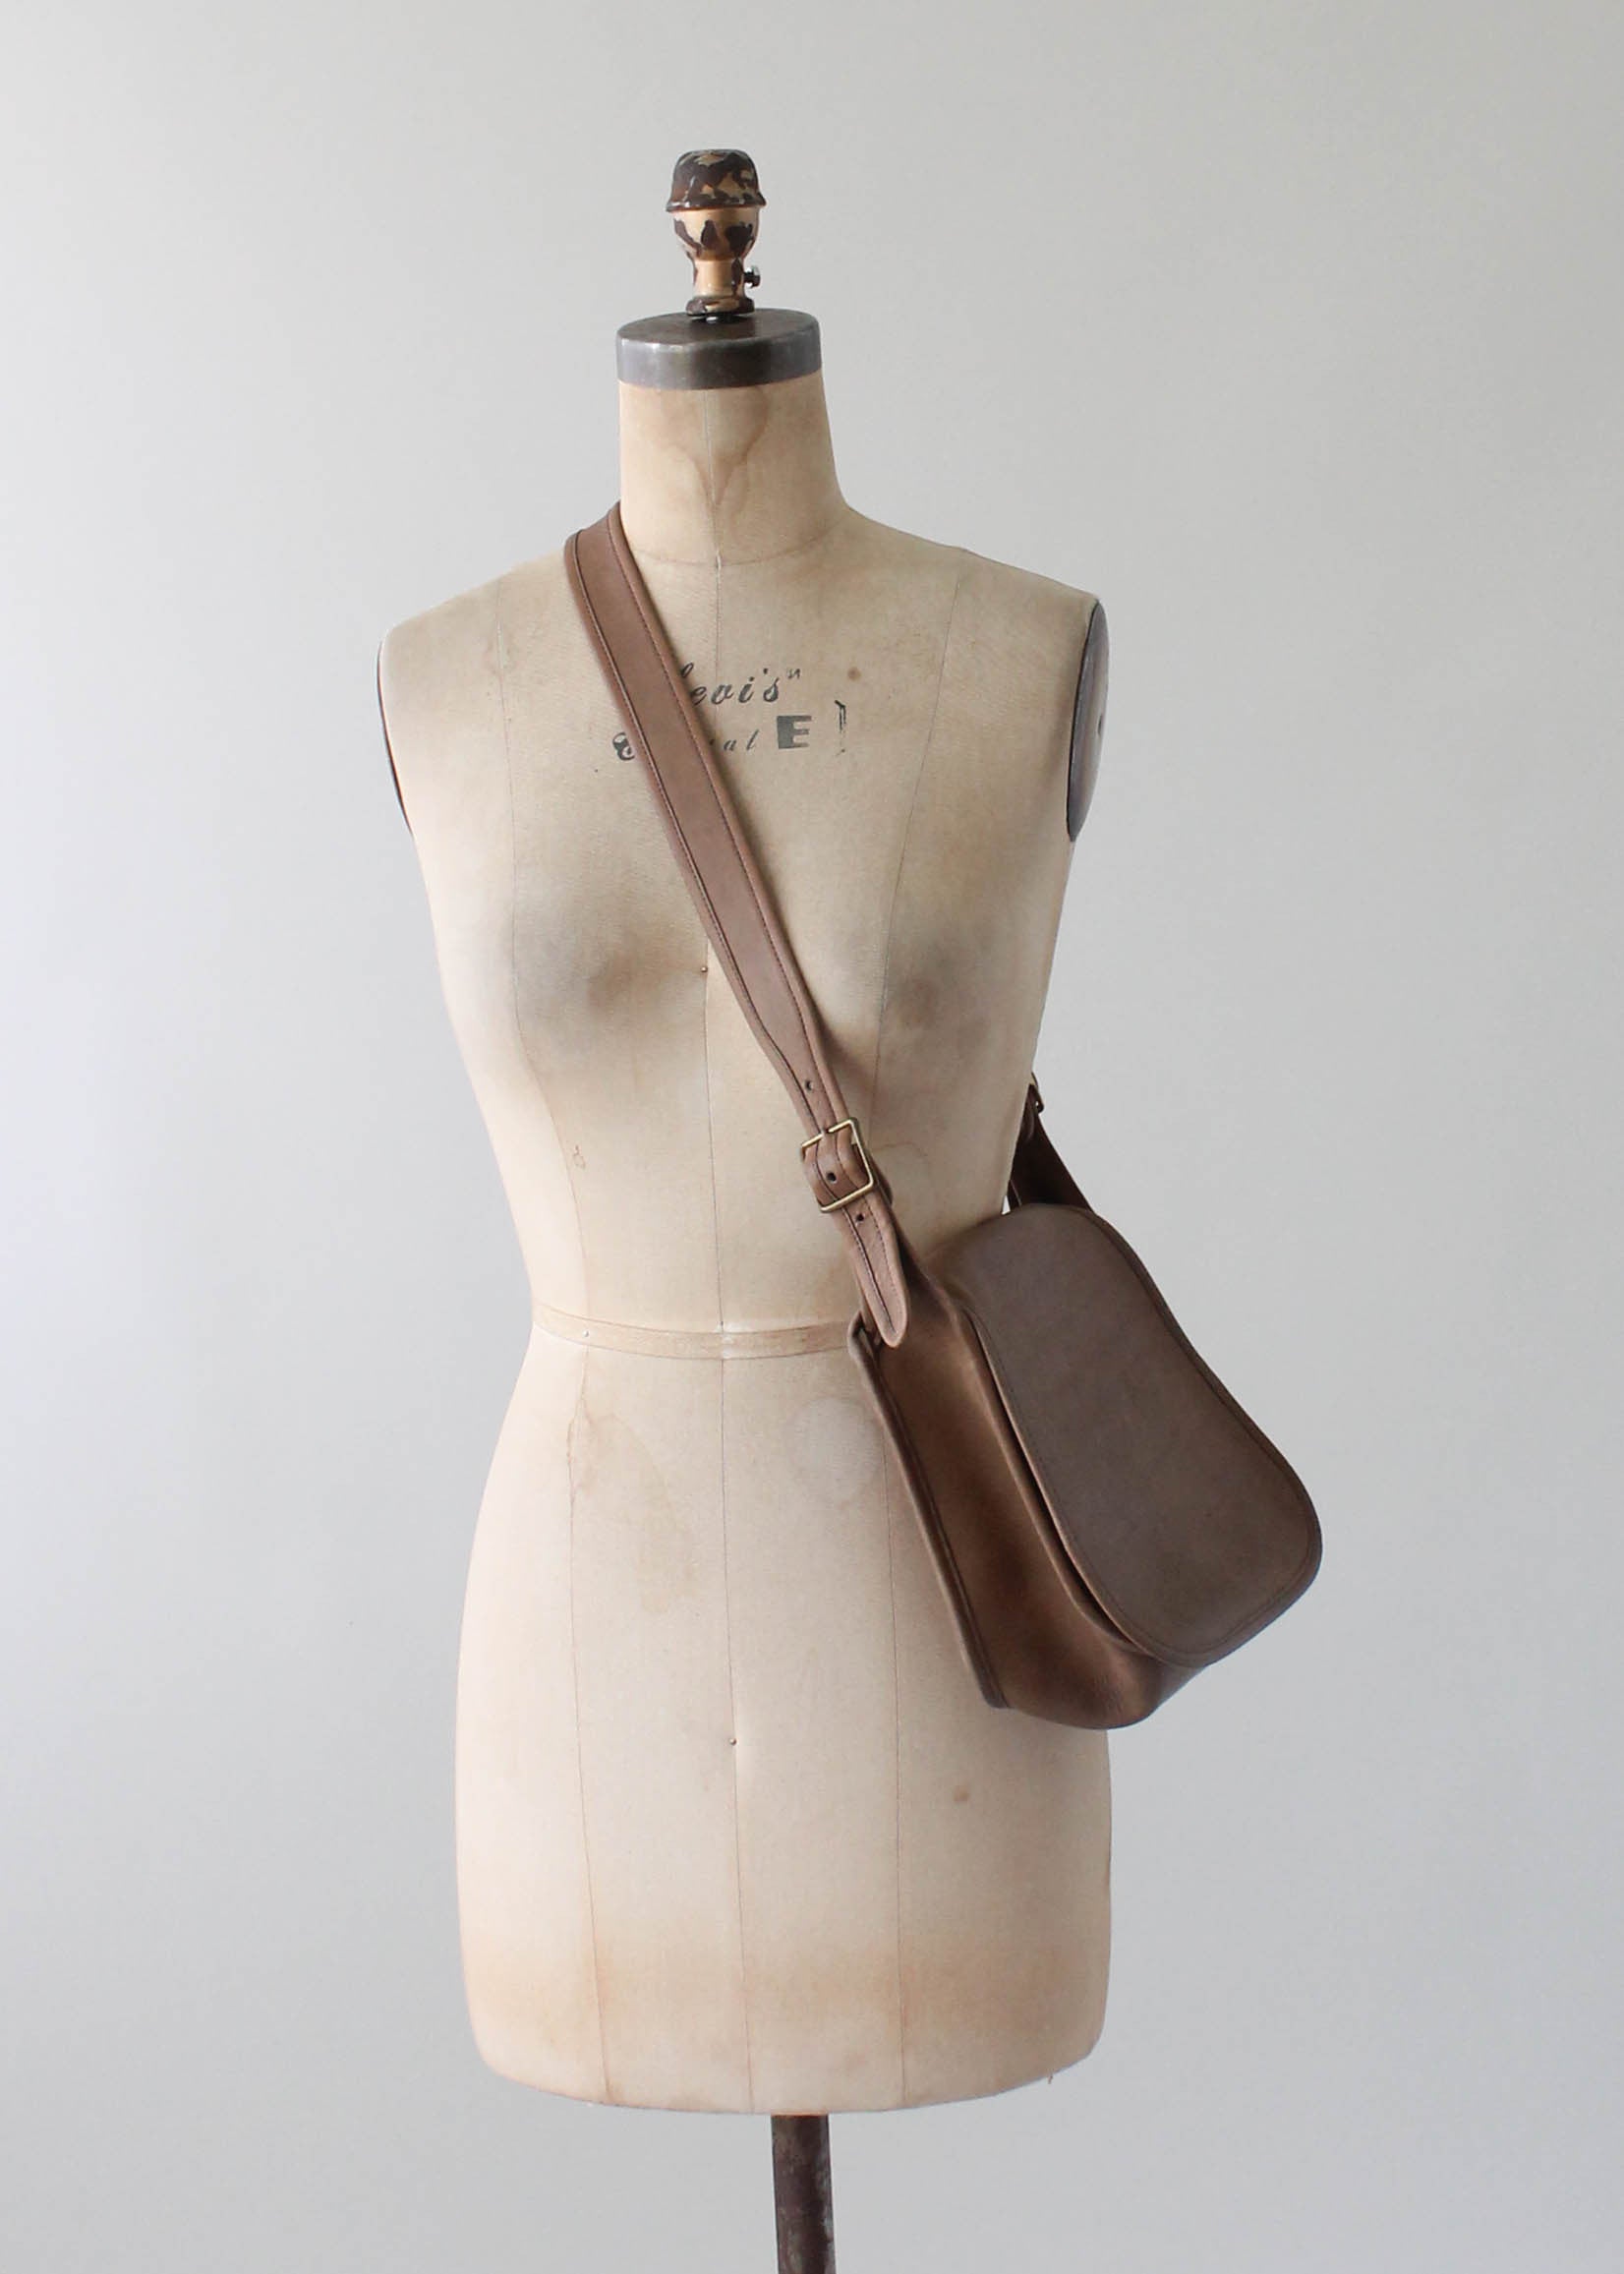 Brighton Womens Cross Body Mini Flap Saddle Bag Leather White Silver Heart  Purse | eBay